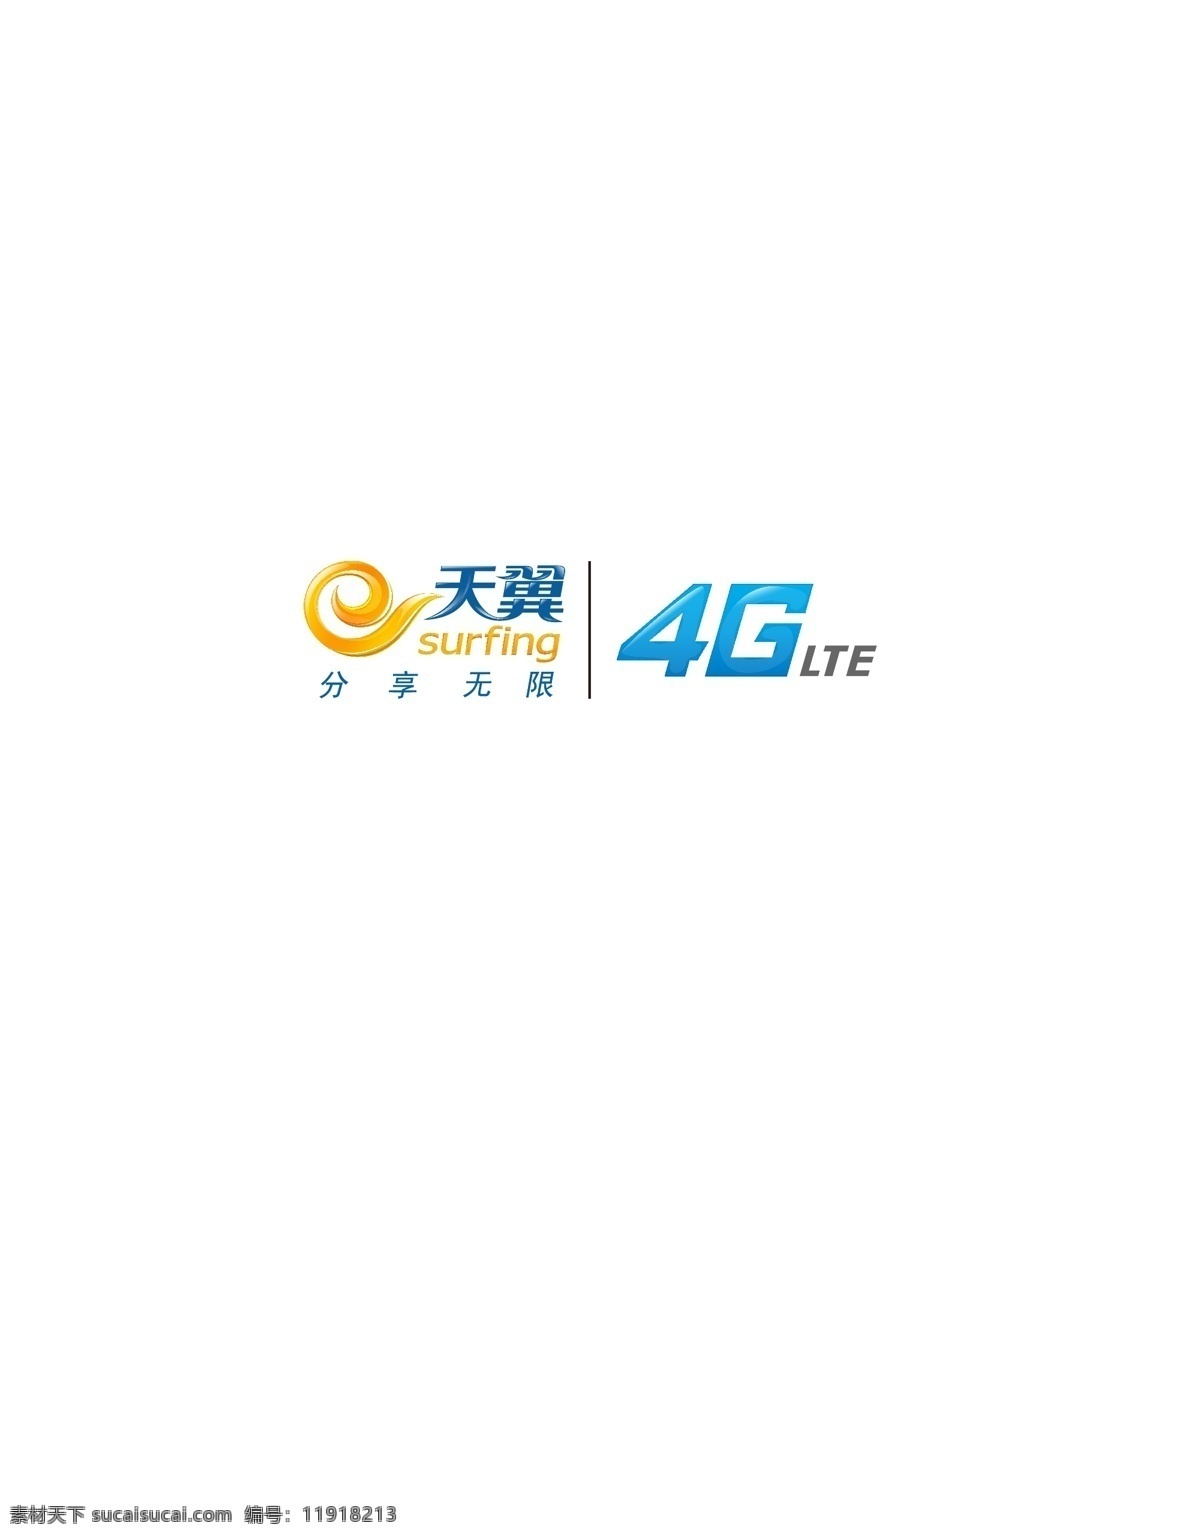 天翼 4glogo logo 4g 电信 天翼logo 标志设计 logo设计